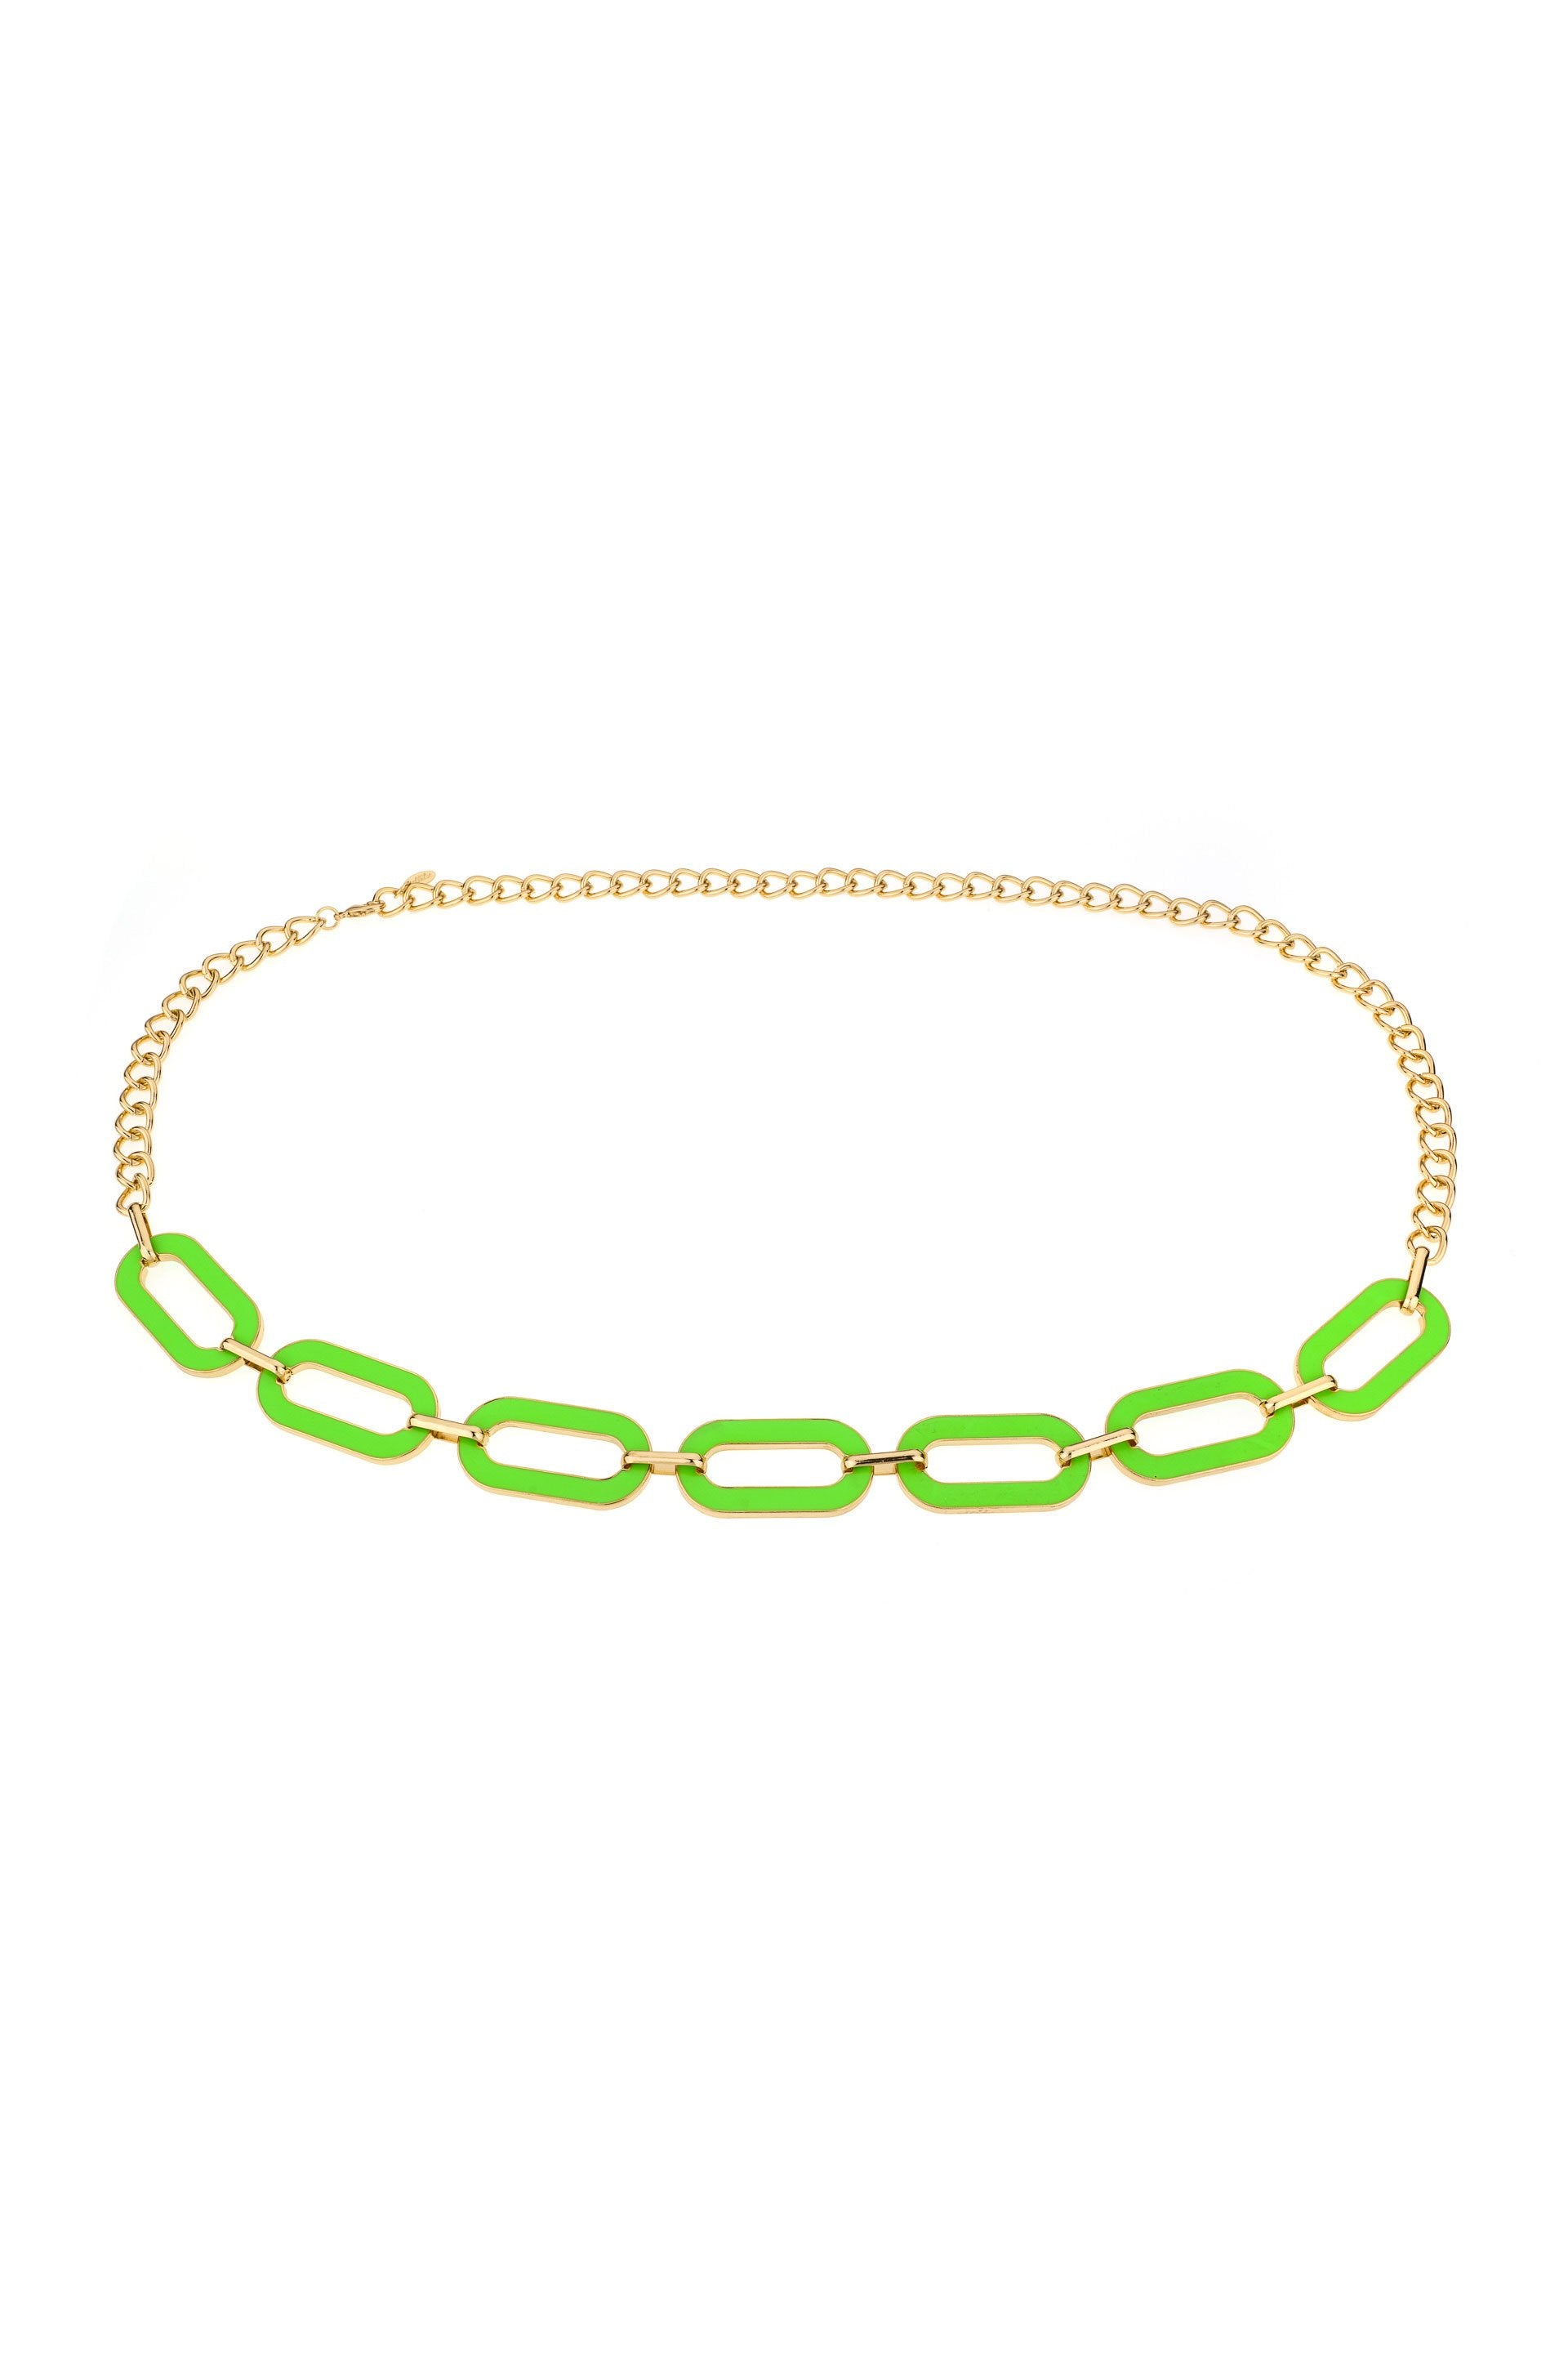 Neon Green Link Belt on white